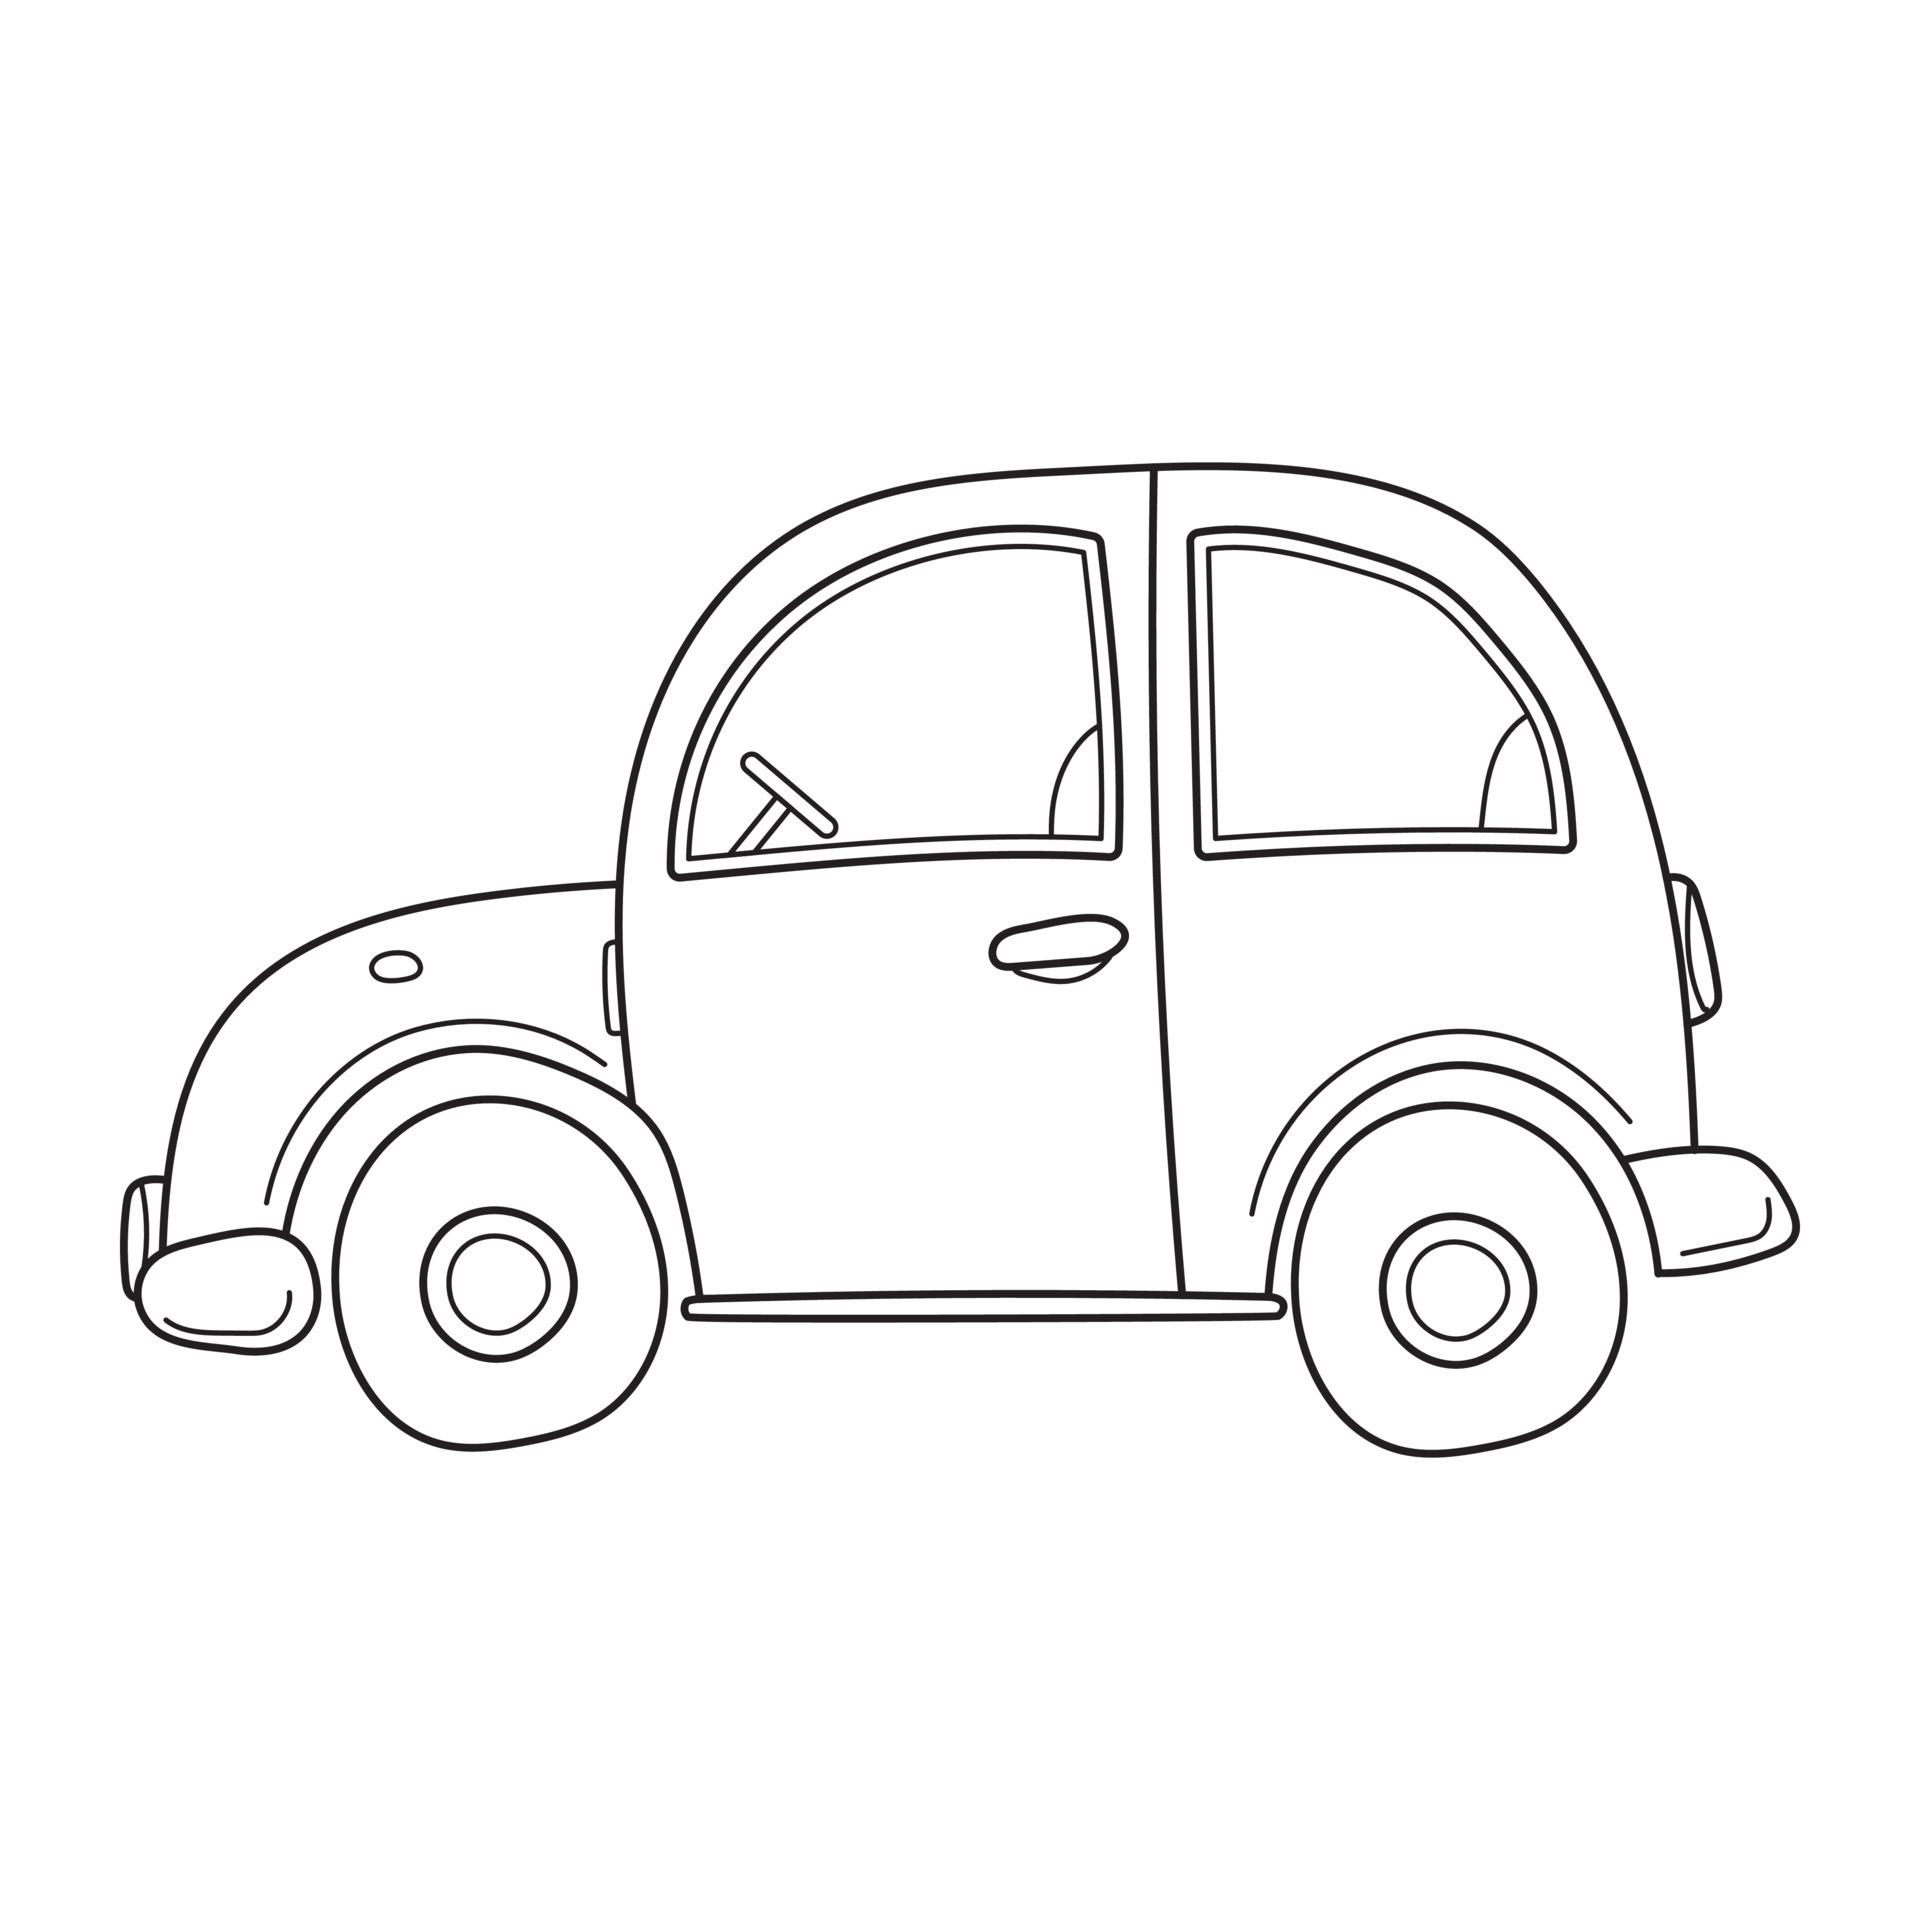 Car sketch. vector • wall stickers draft, blueprint, simple | myloview.com